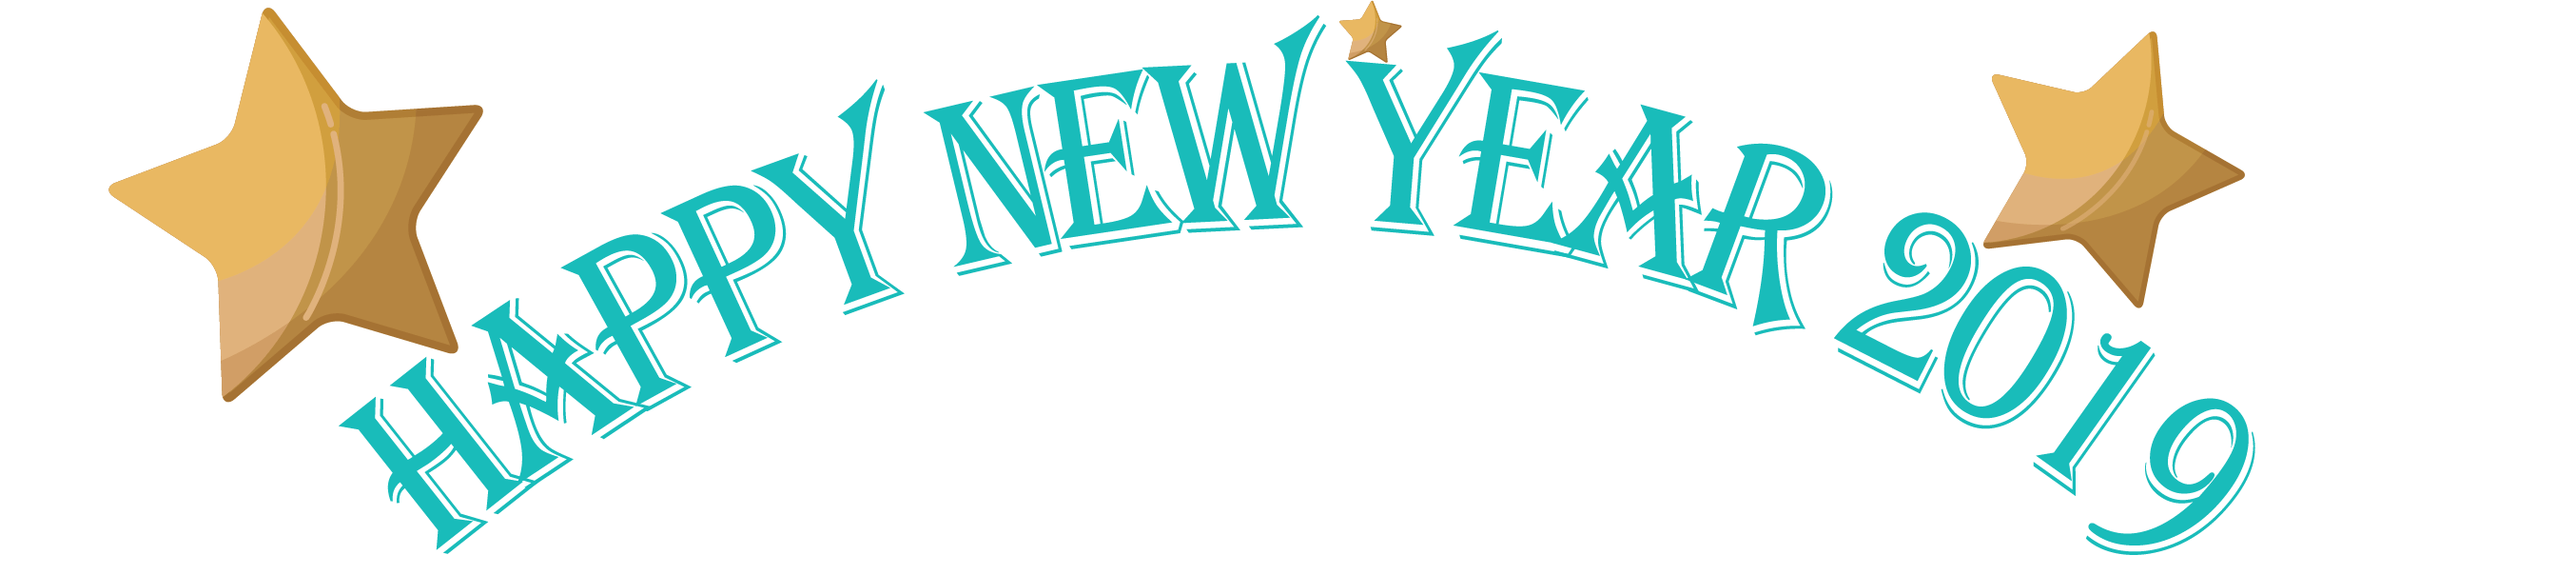 Stars, Banner, 2019, Happy New Year